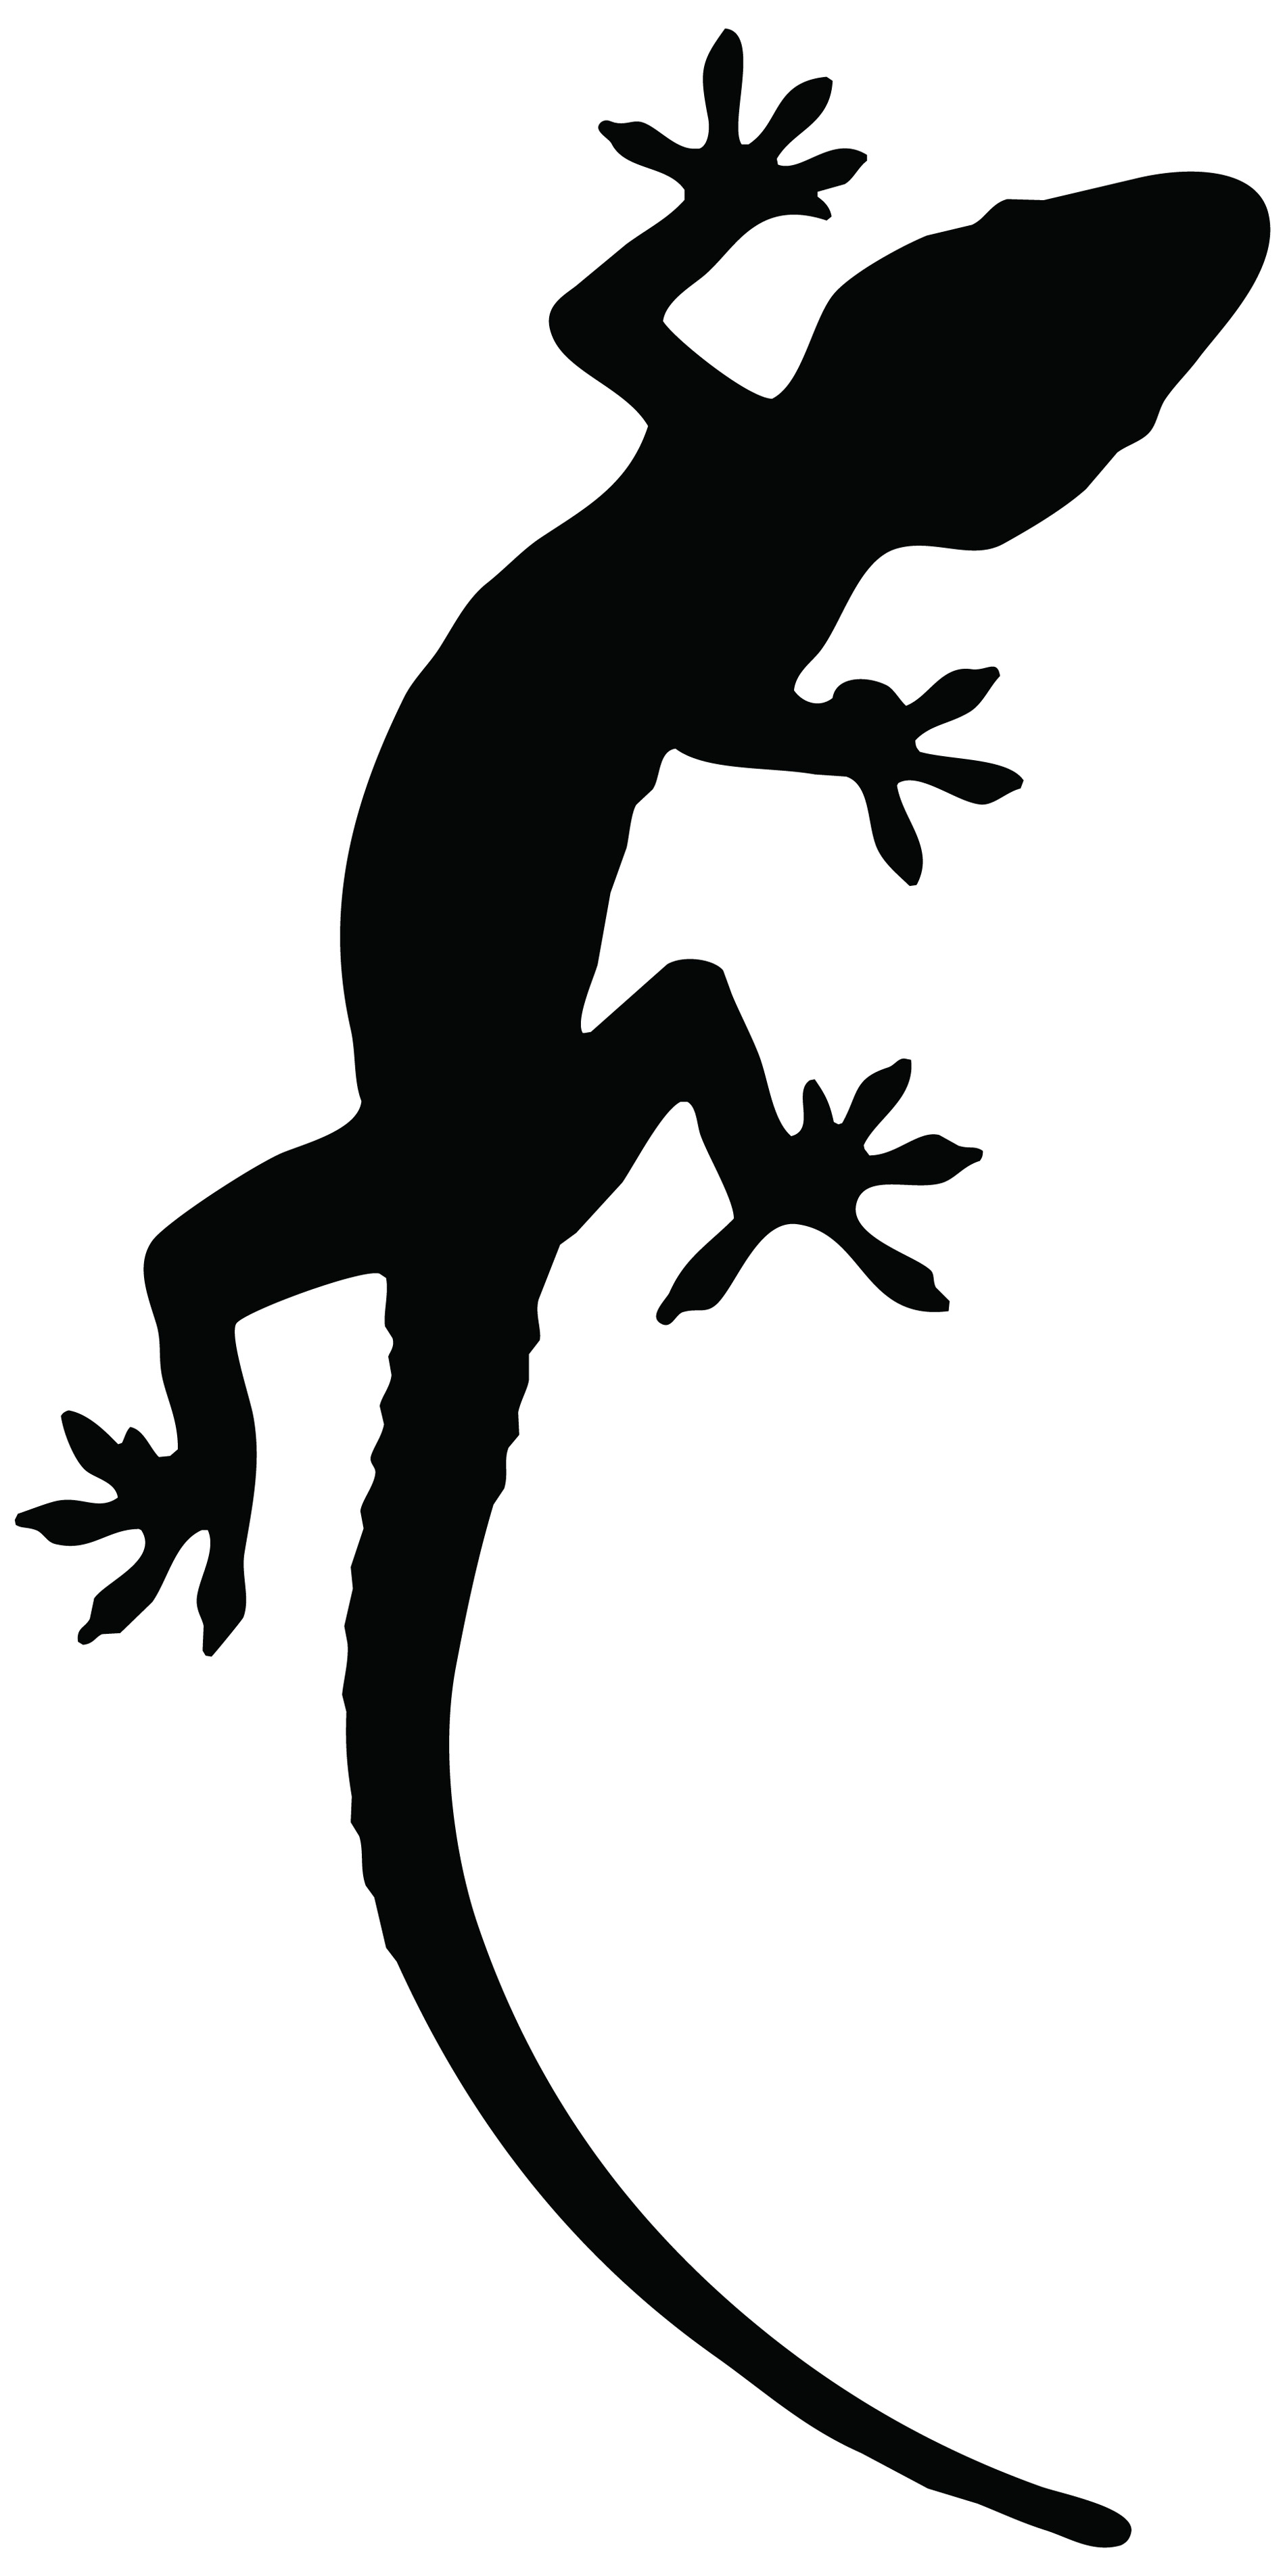 Black Reptile Lizard Tattoo Stencil | Tattoobite.com